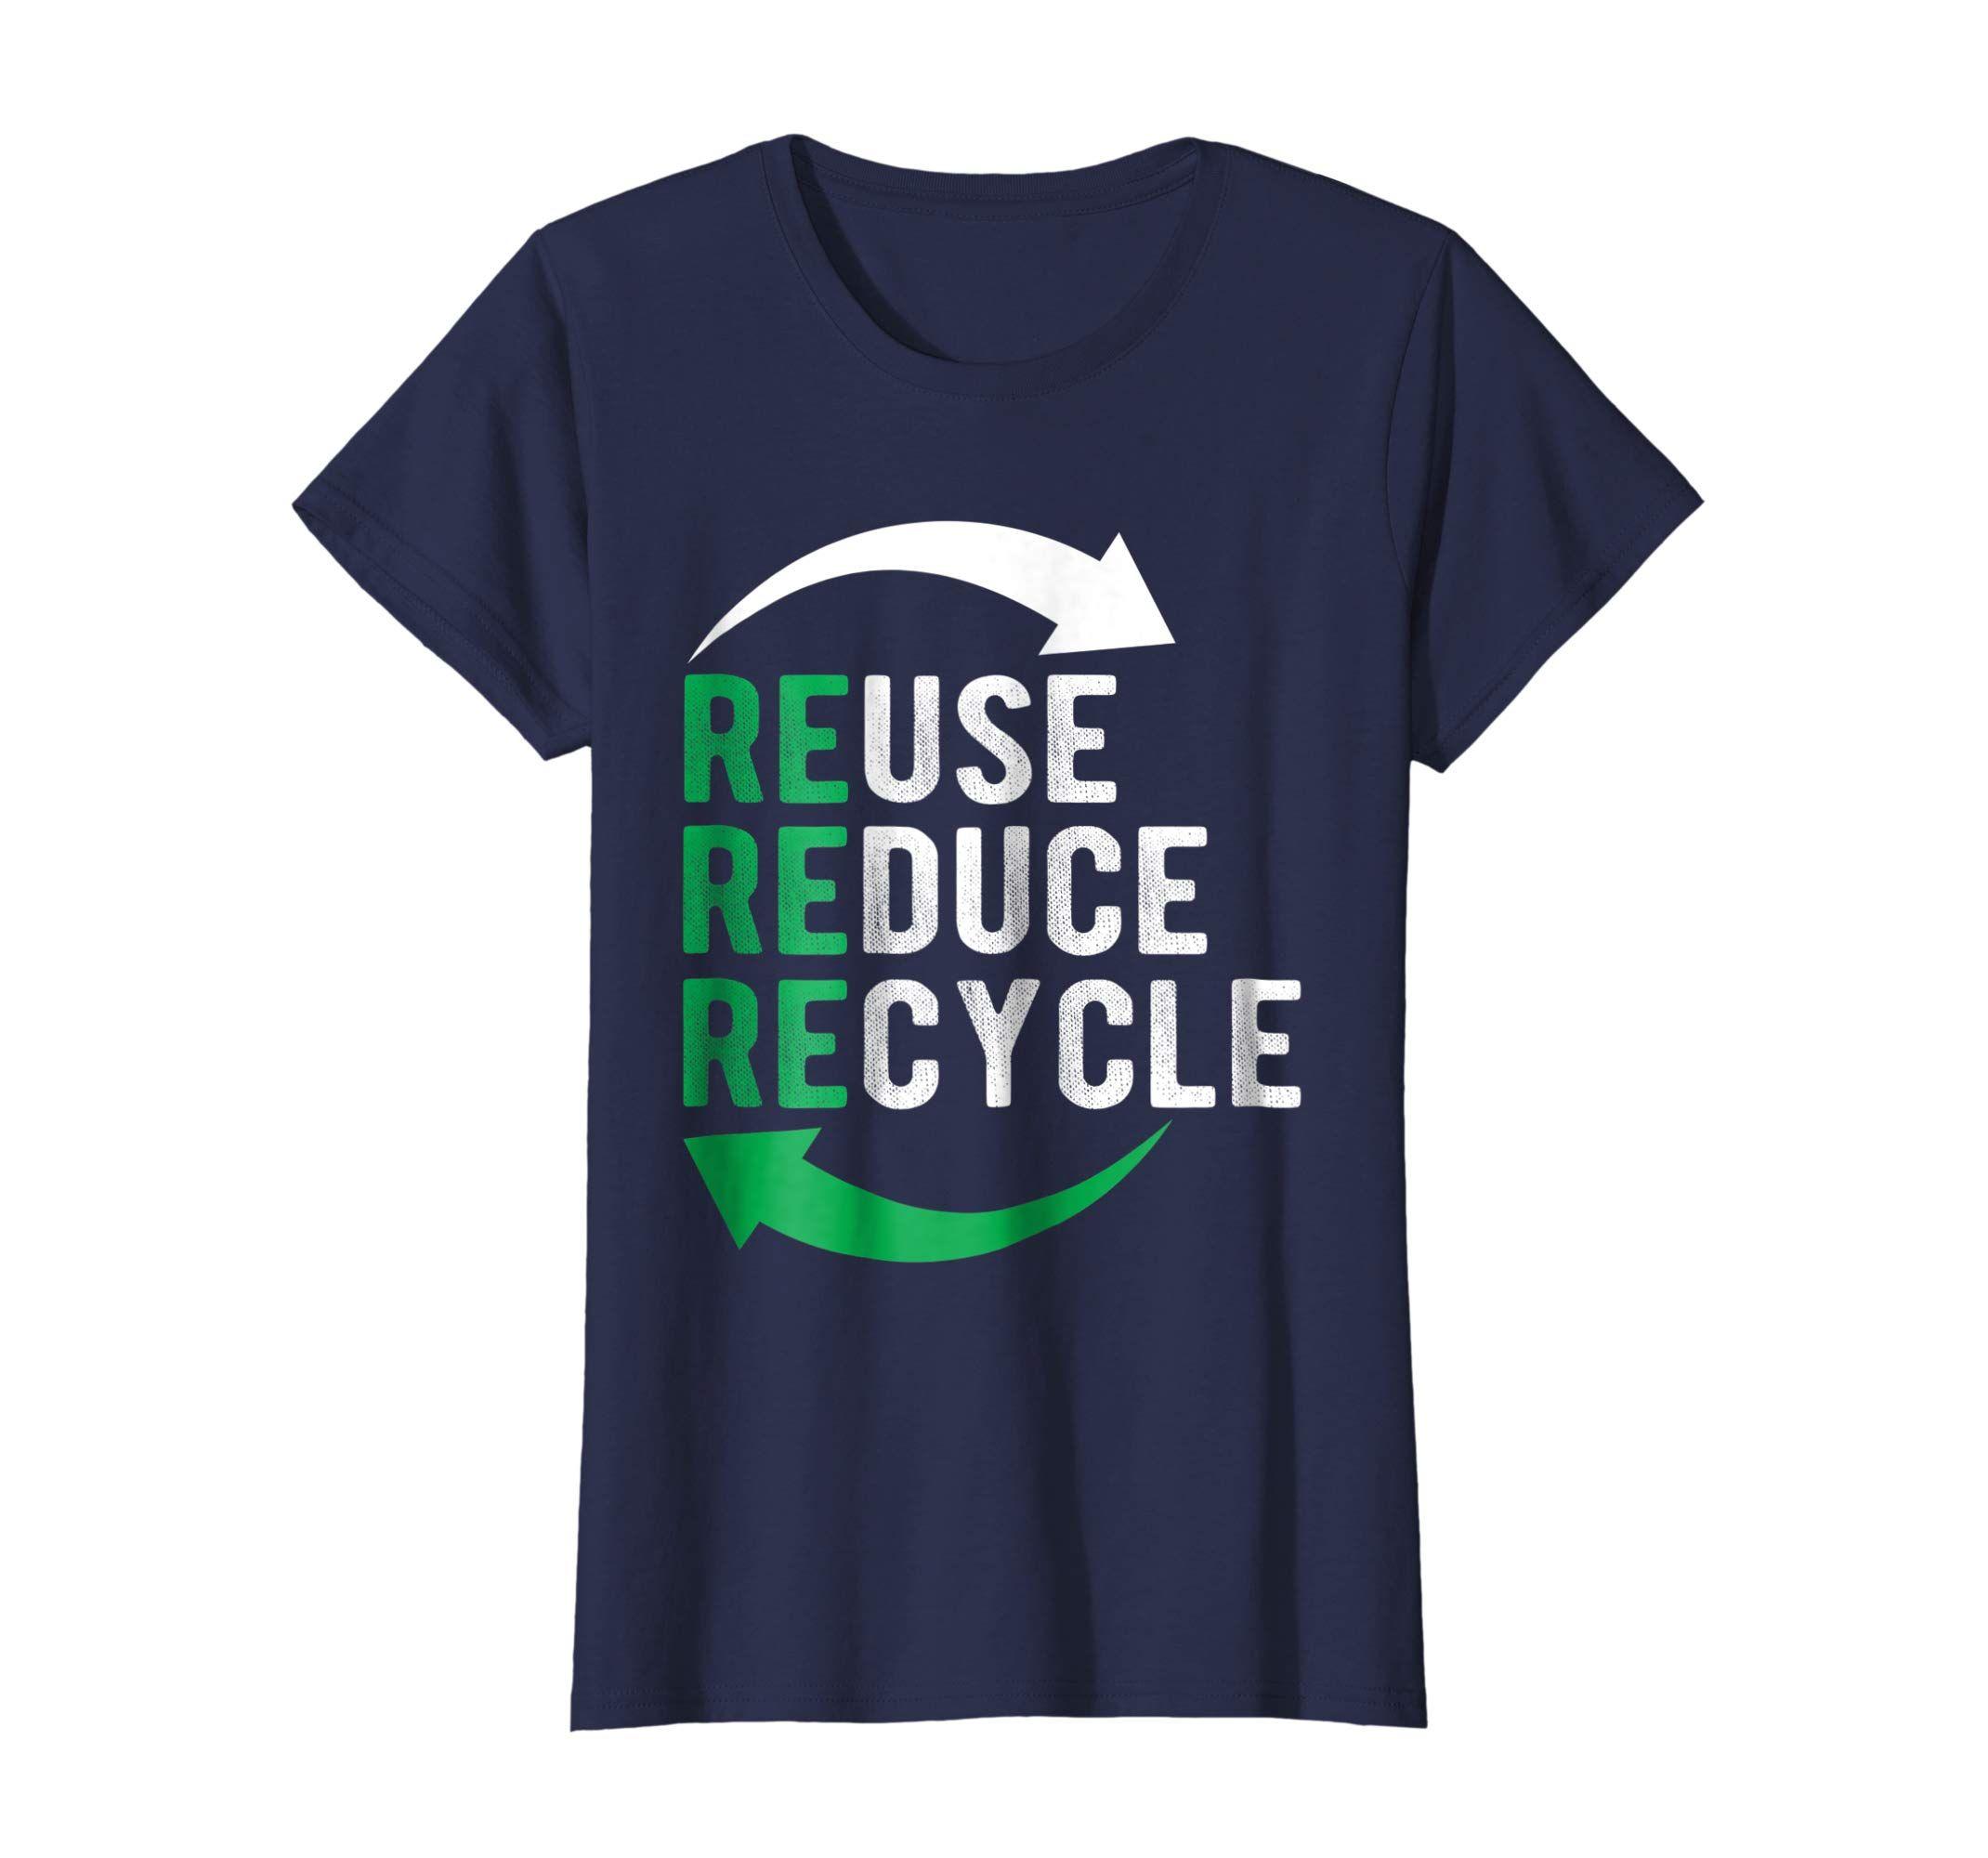 Reuse Logo - Amazon.com: I Recycle T-shirt Reuse Green Logo Sign Recycling T ...